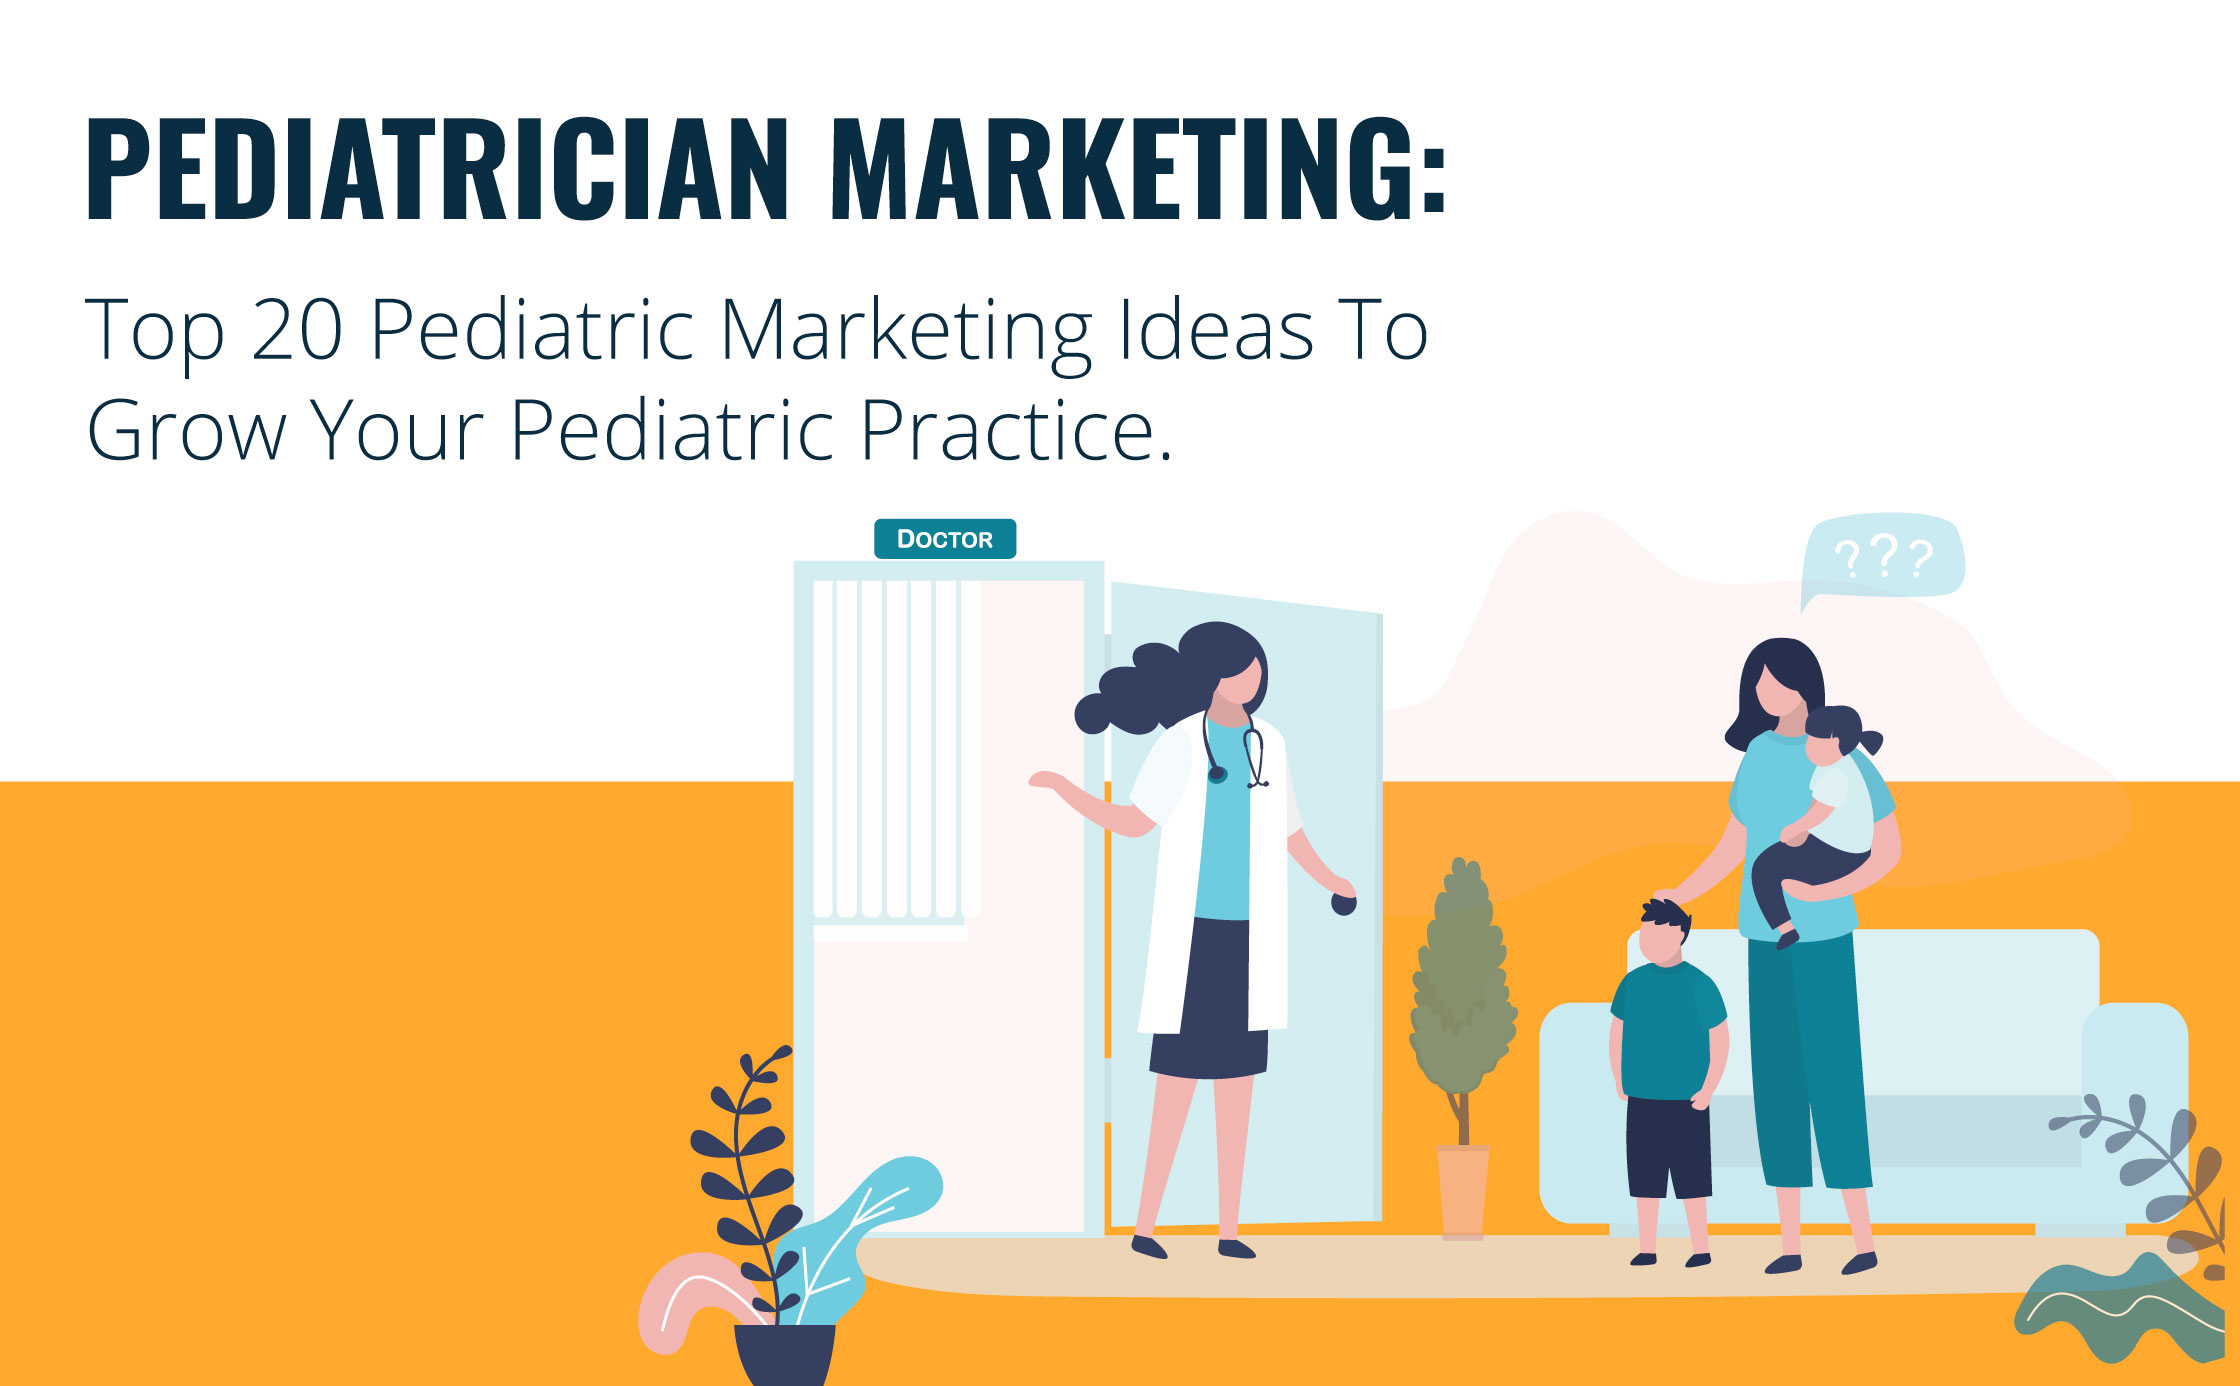 Pediatrician Marketing: Top 20 Pediatric Marketing Ideas To Grow Your Pediatric Practice